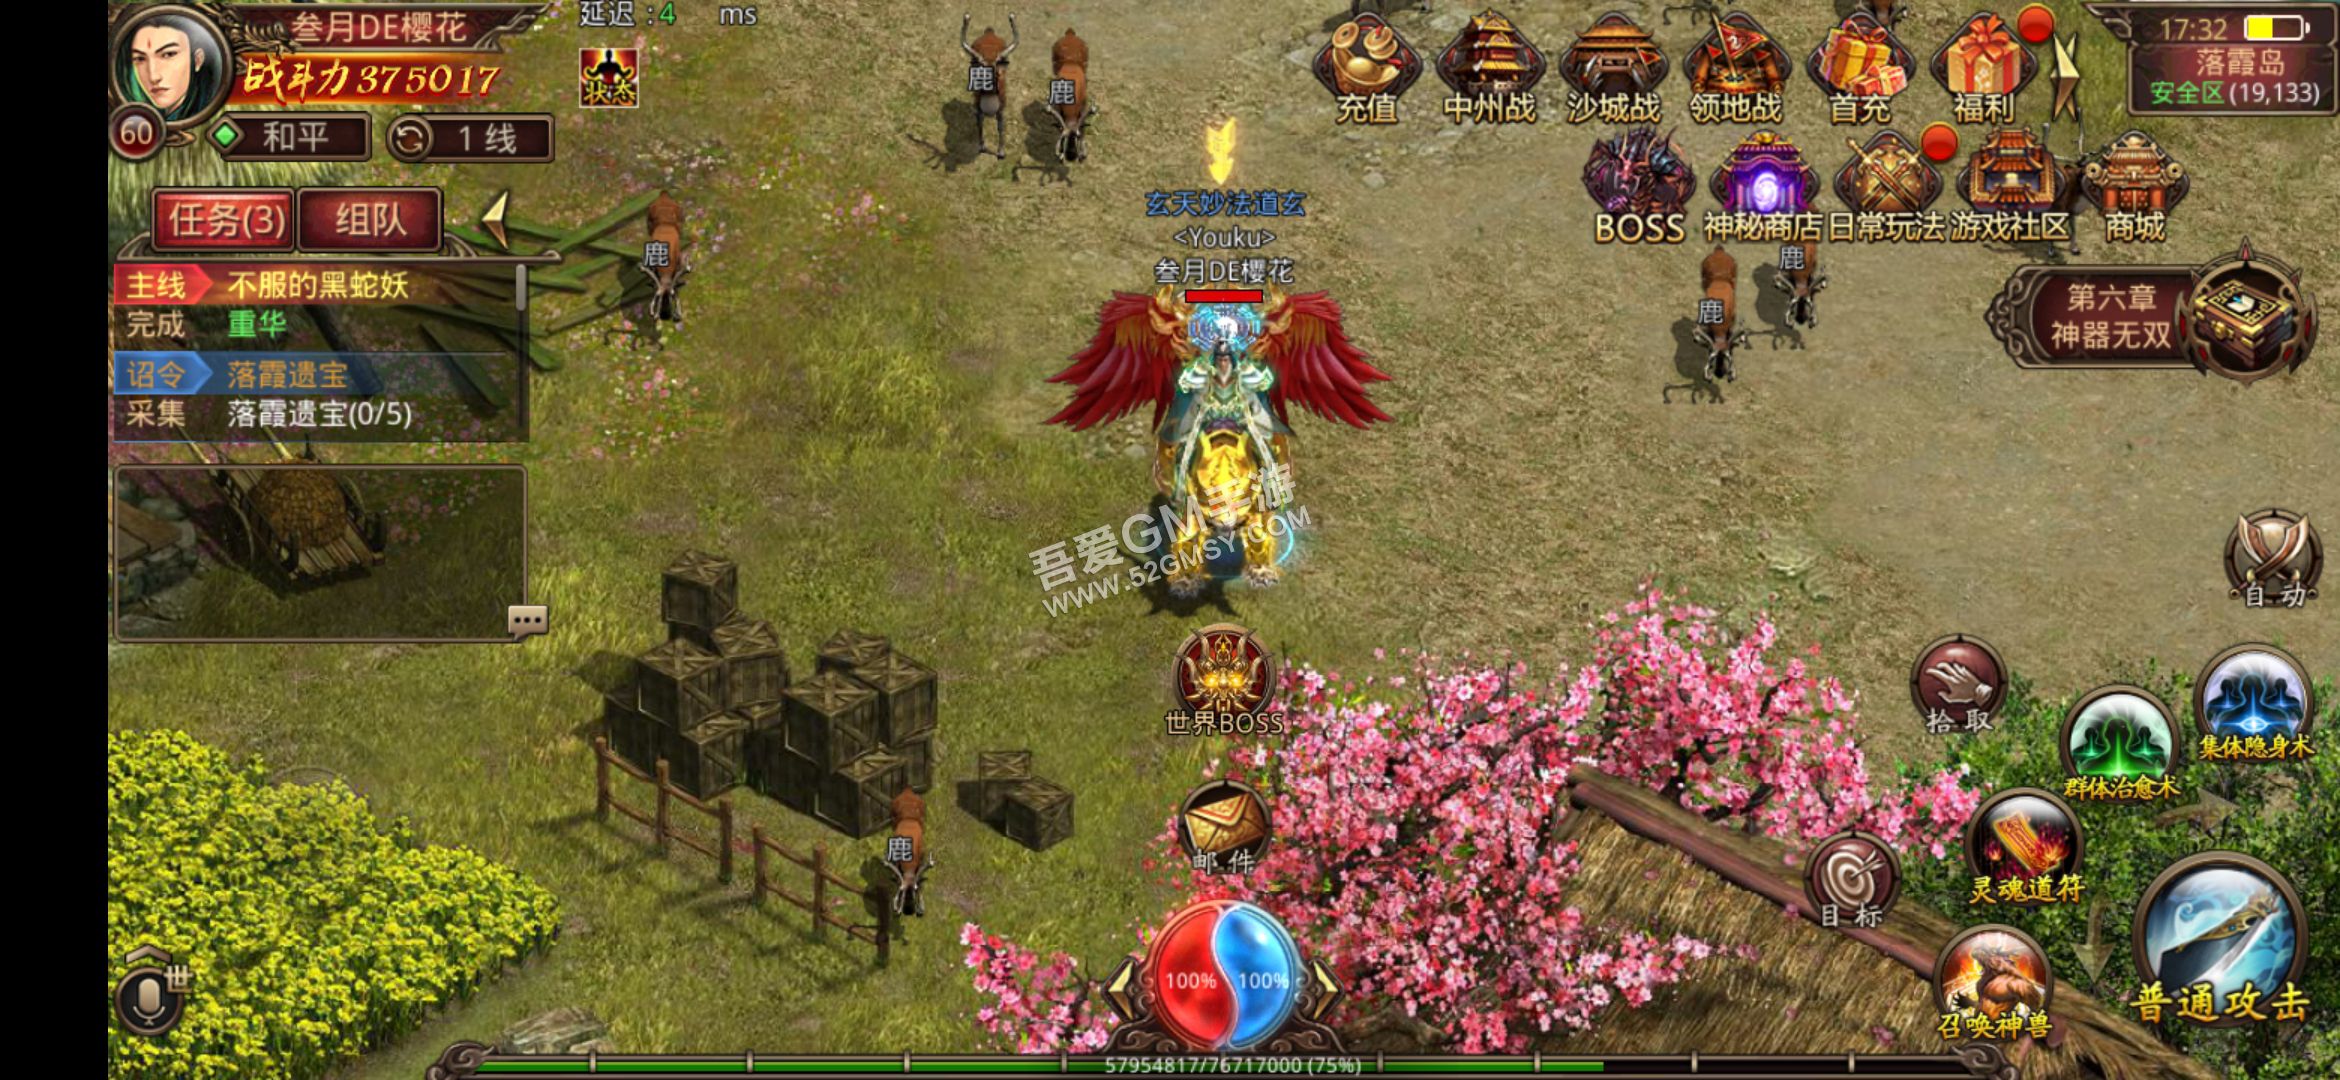 Screenshot_20200201_173232_com.longwen.game.jpg